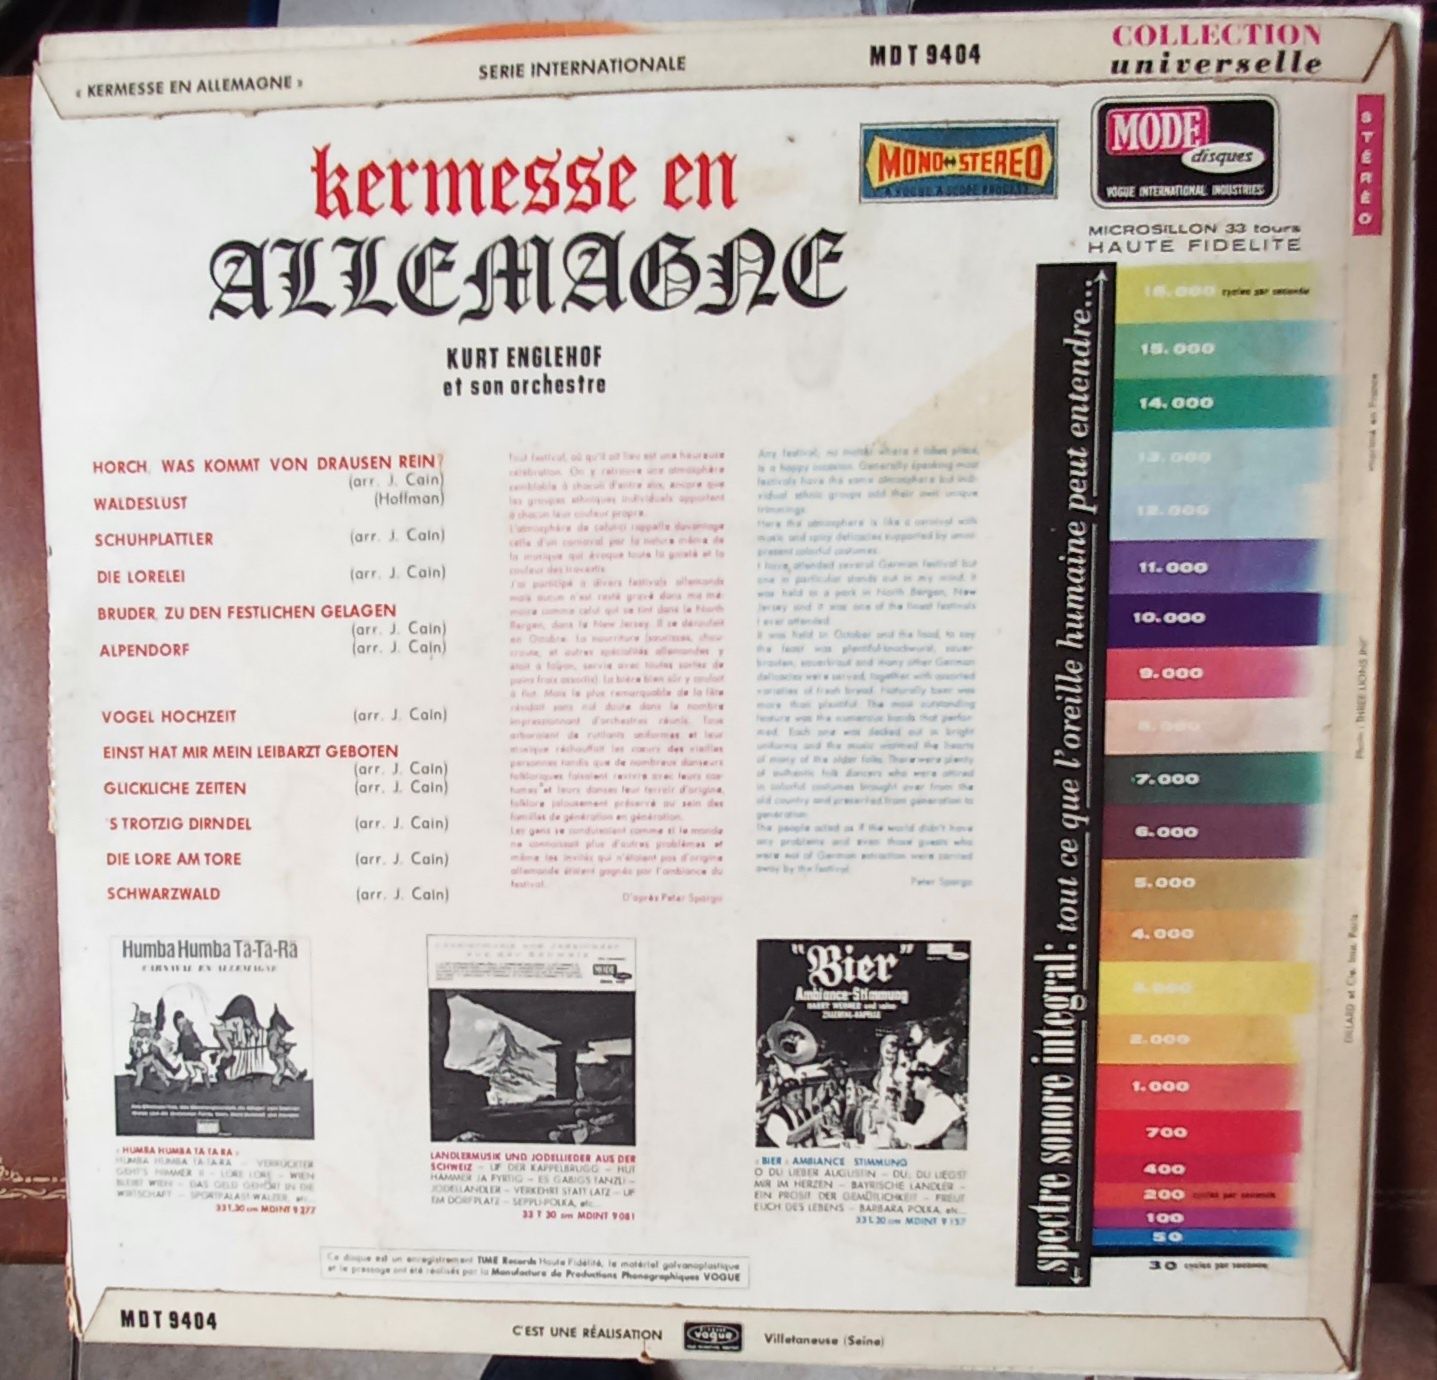 Disco de vinil, LP, Kut Englehof e sua orquestra,1963.